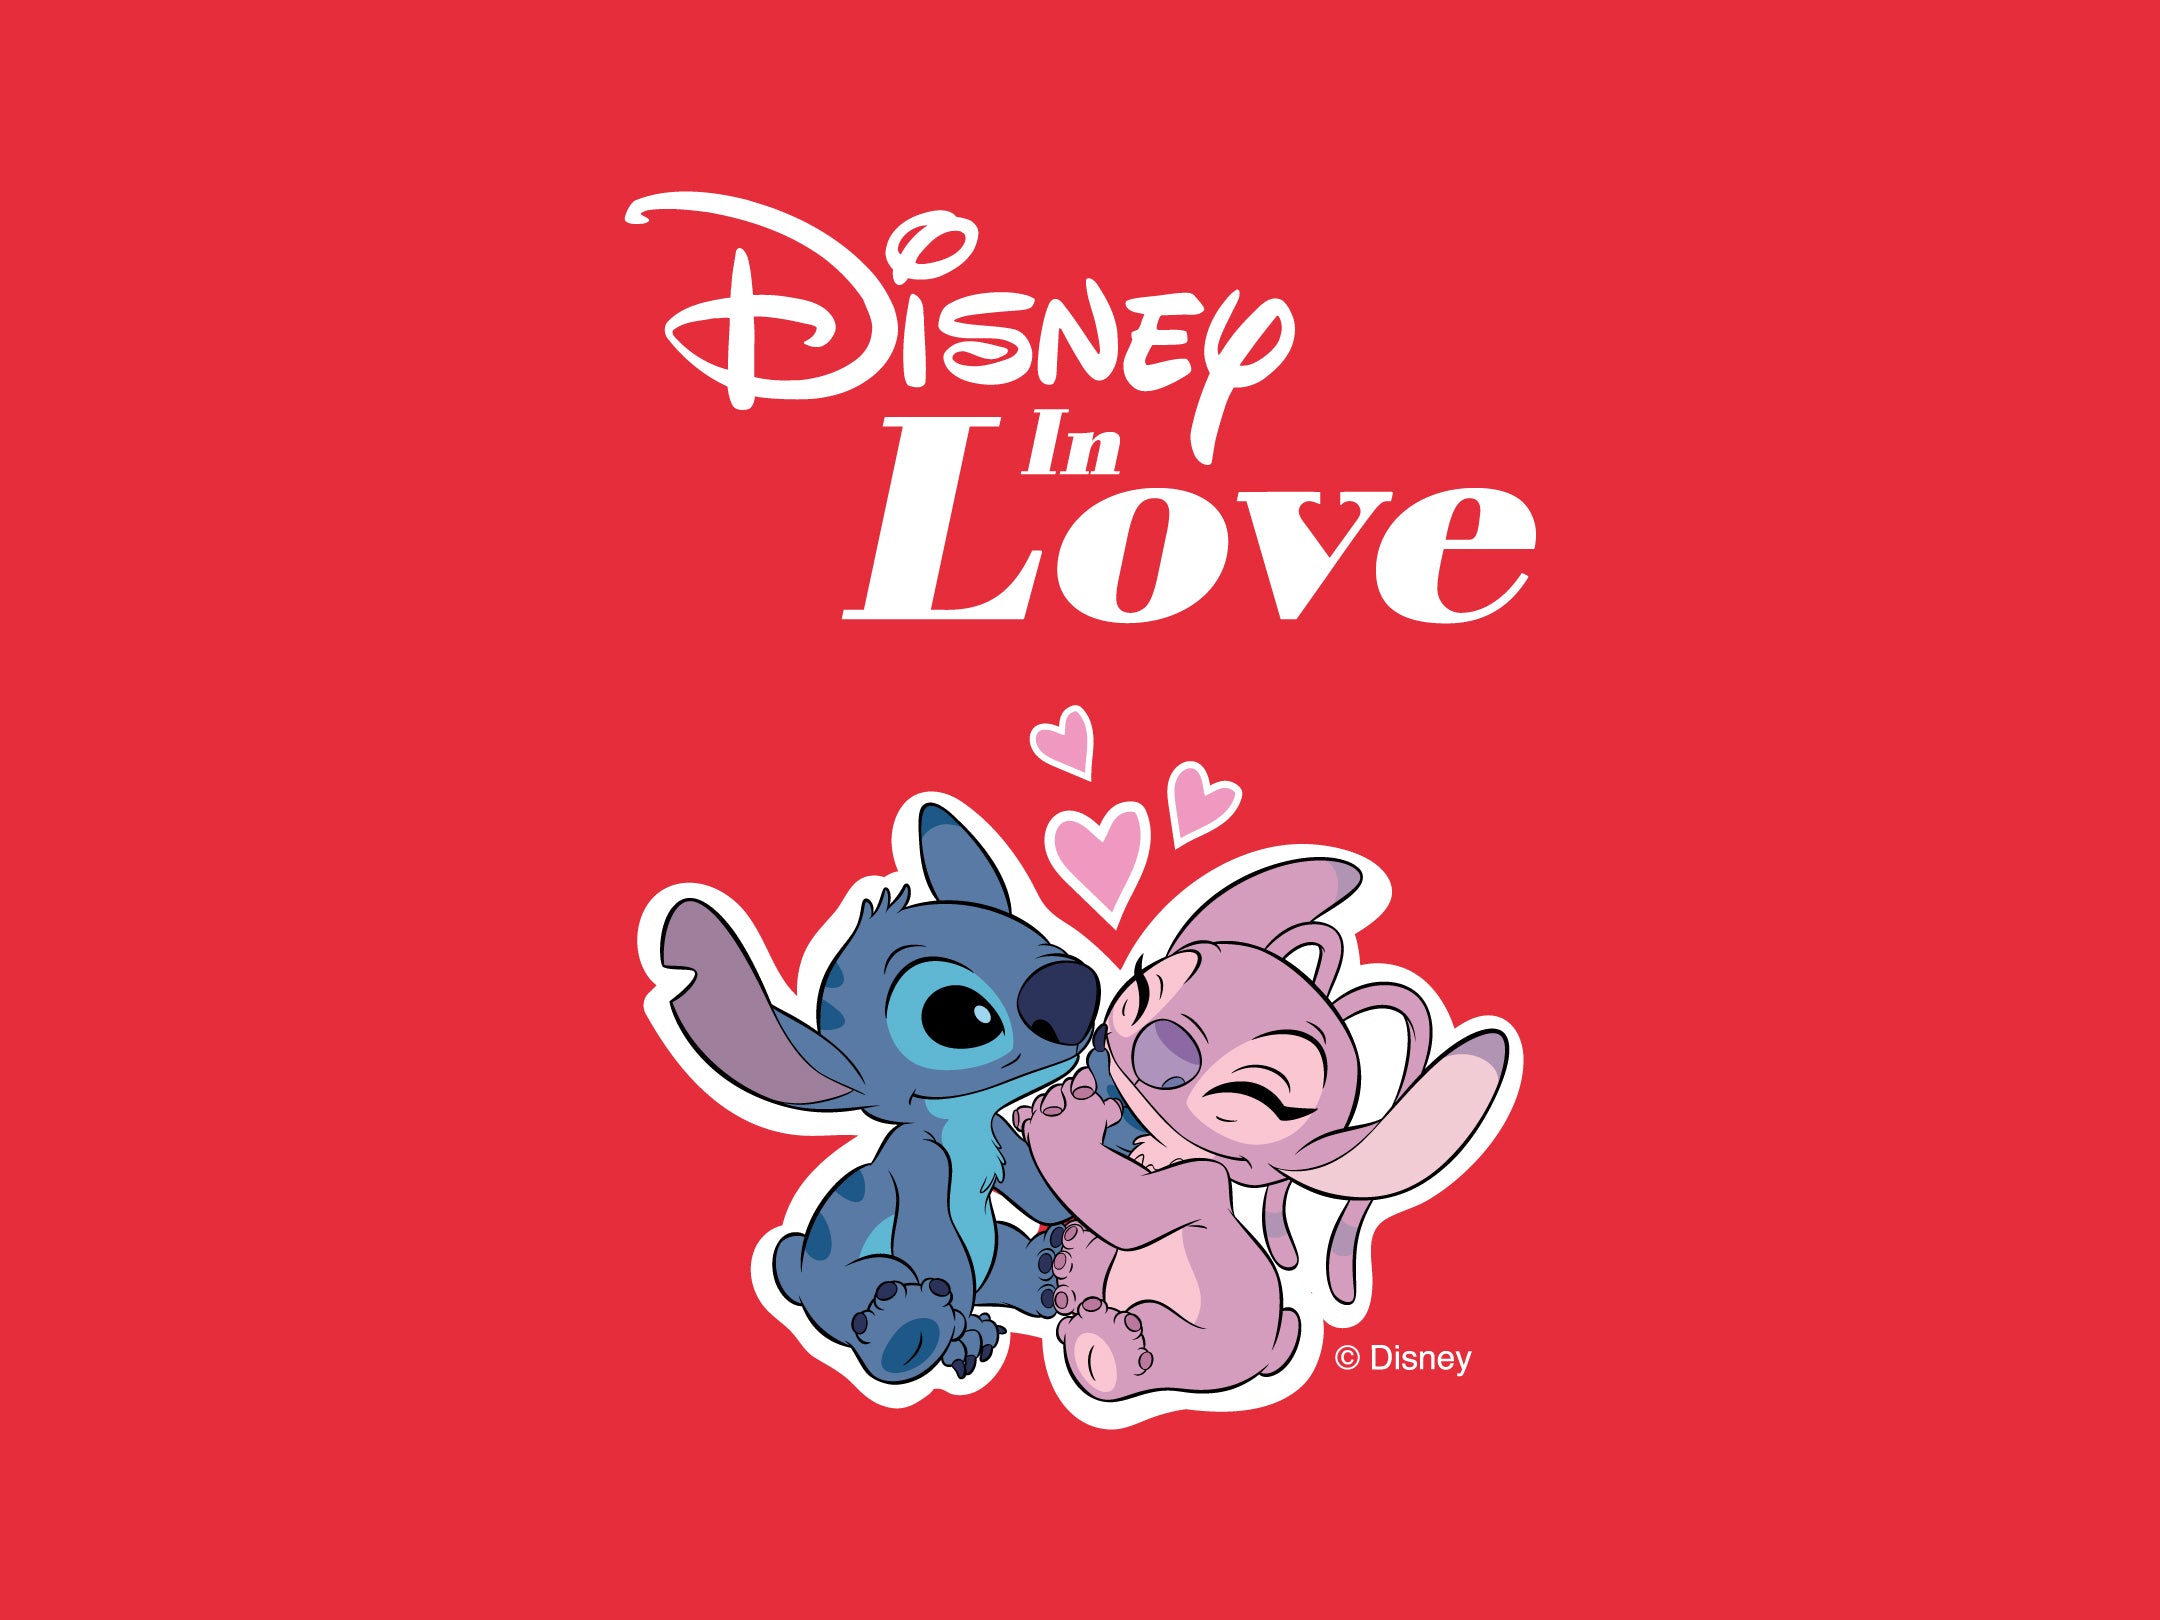 Stitch love  Sticker for Sale by Seven Store